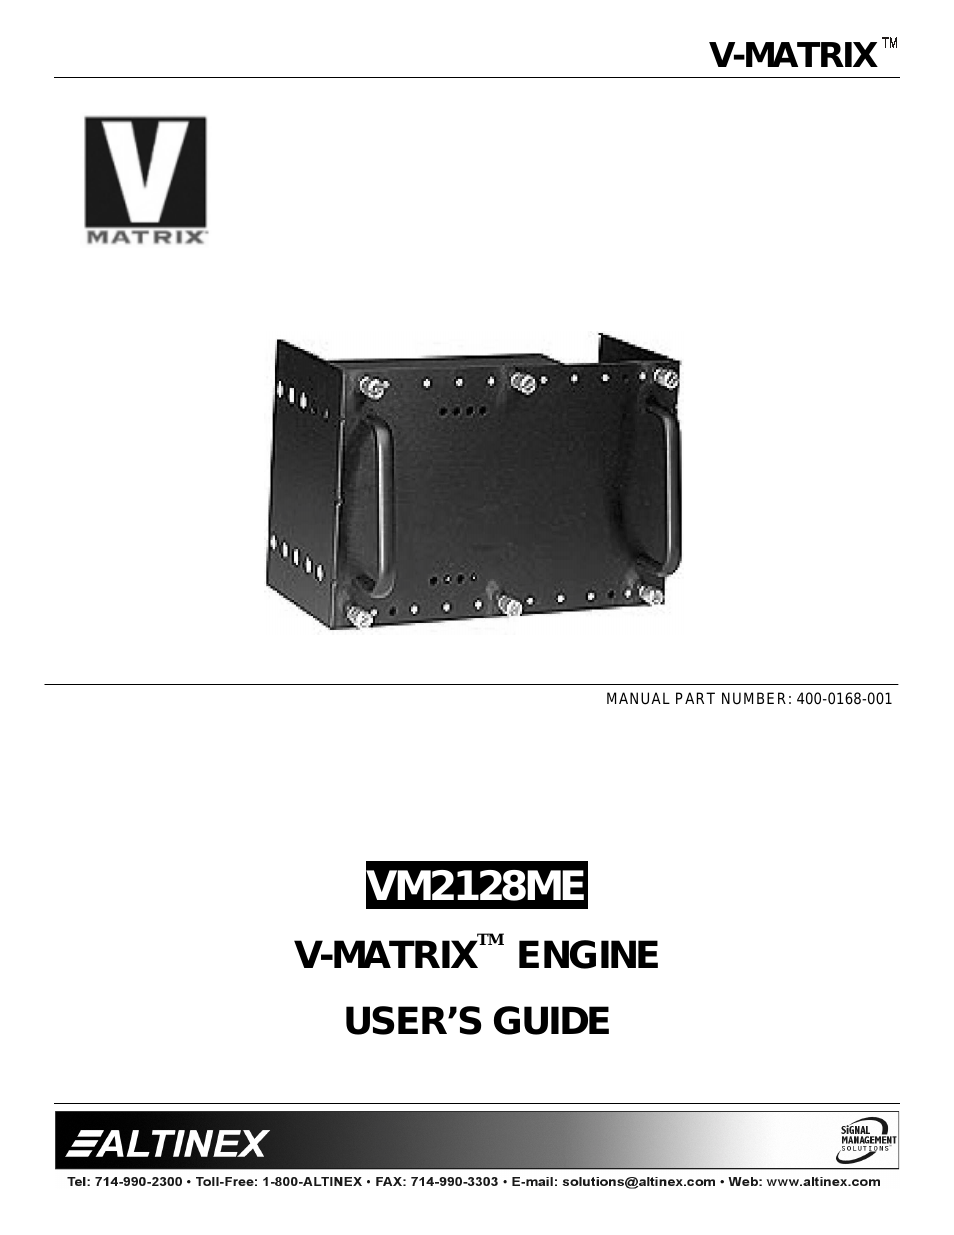 V-MATRIX VM2128ME (Page 1)